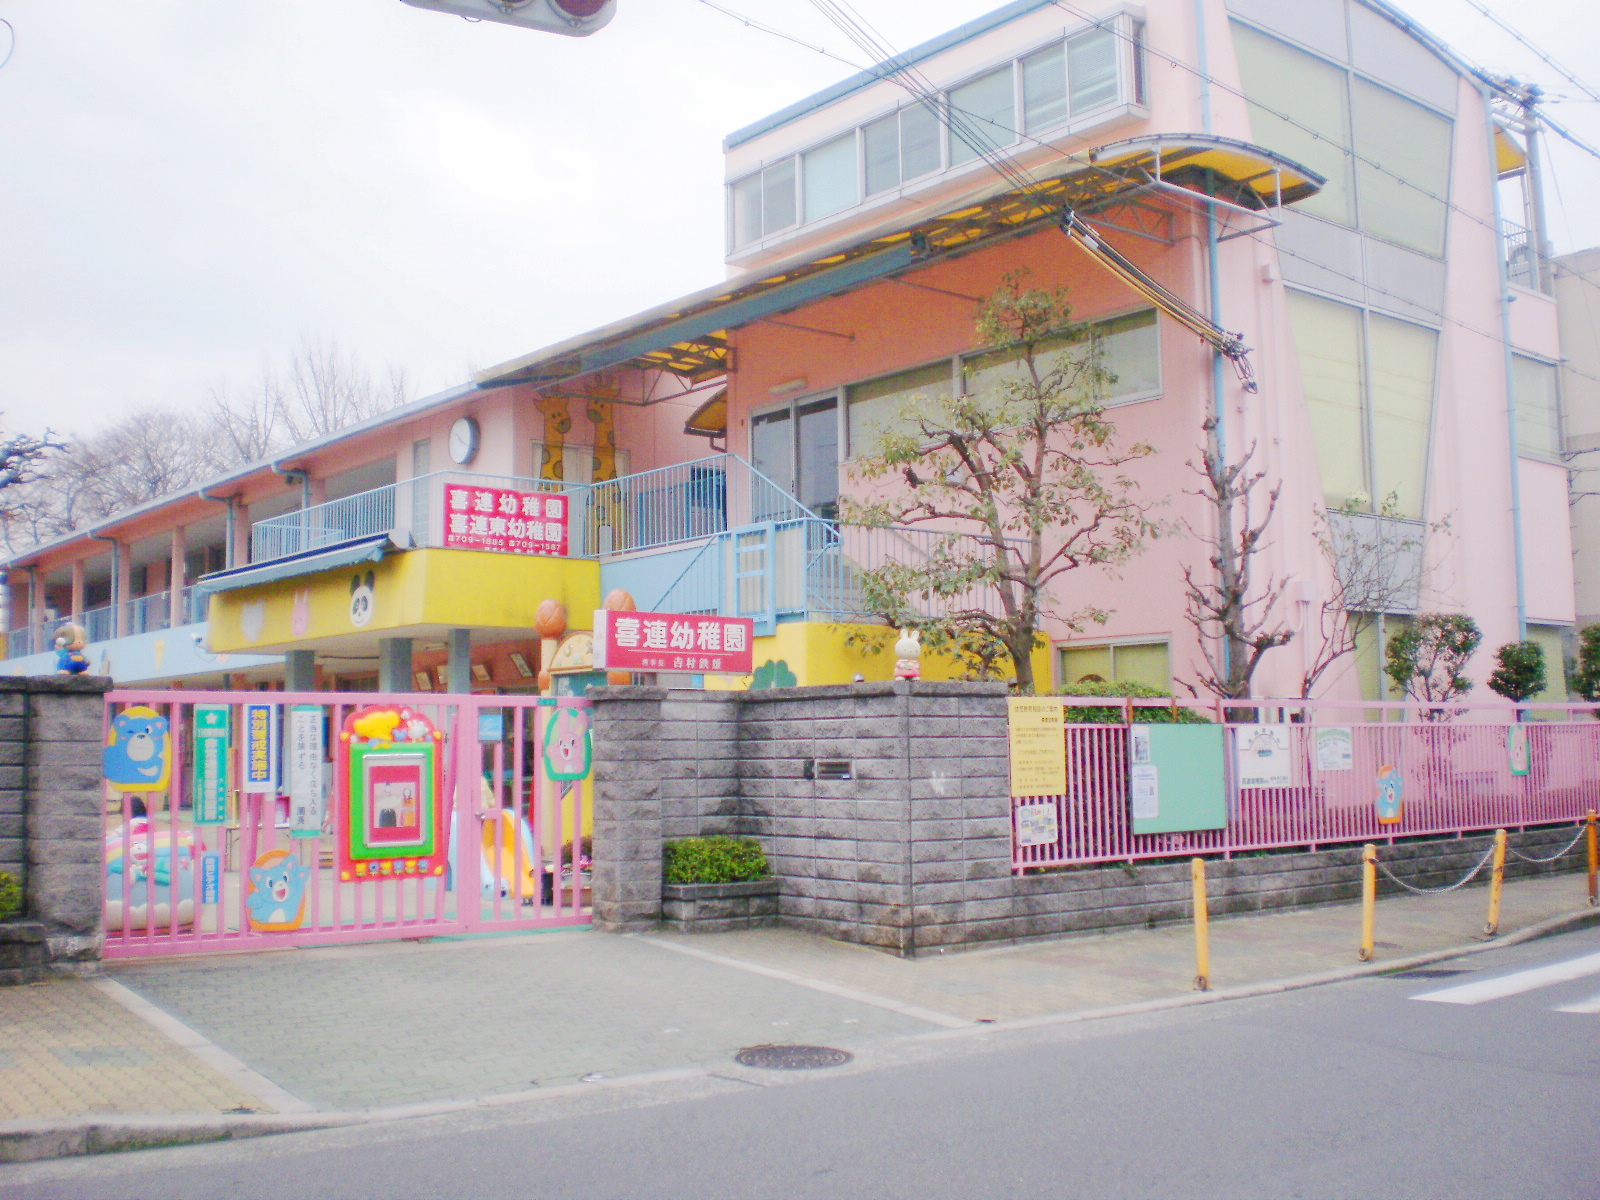 kindergarten ・ Nursery. Kire kindergarten (kindergarten ・ 182m to the nursery)